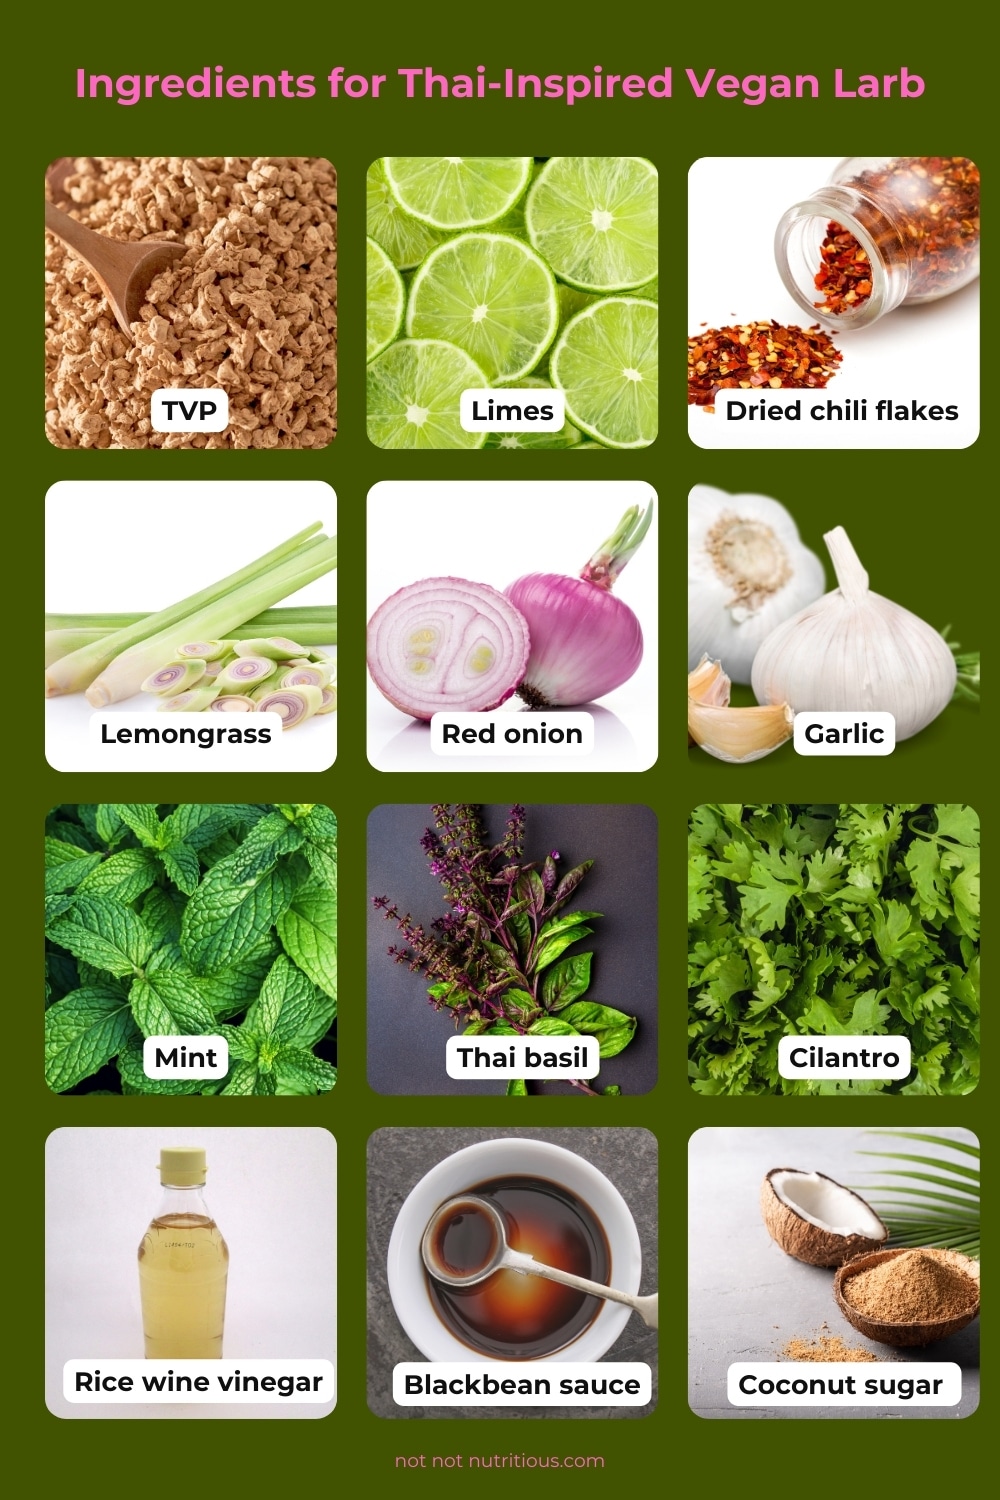 Ingredient list for Thai-Inspired Vegan Larb: TVP, limes and juice, dried chili flakes, lemongrass, shallot, garlic, mint, Thai basil, cilantro, rice vinegar, Blackbean sauce, coconut sugar